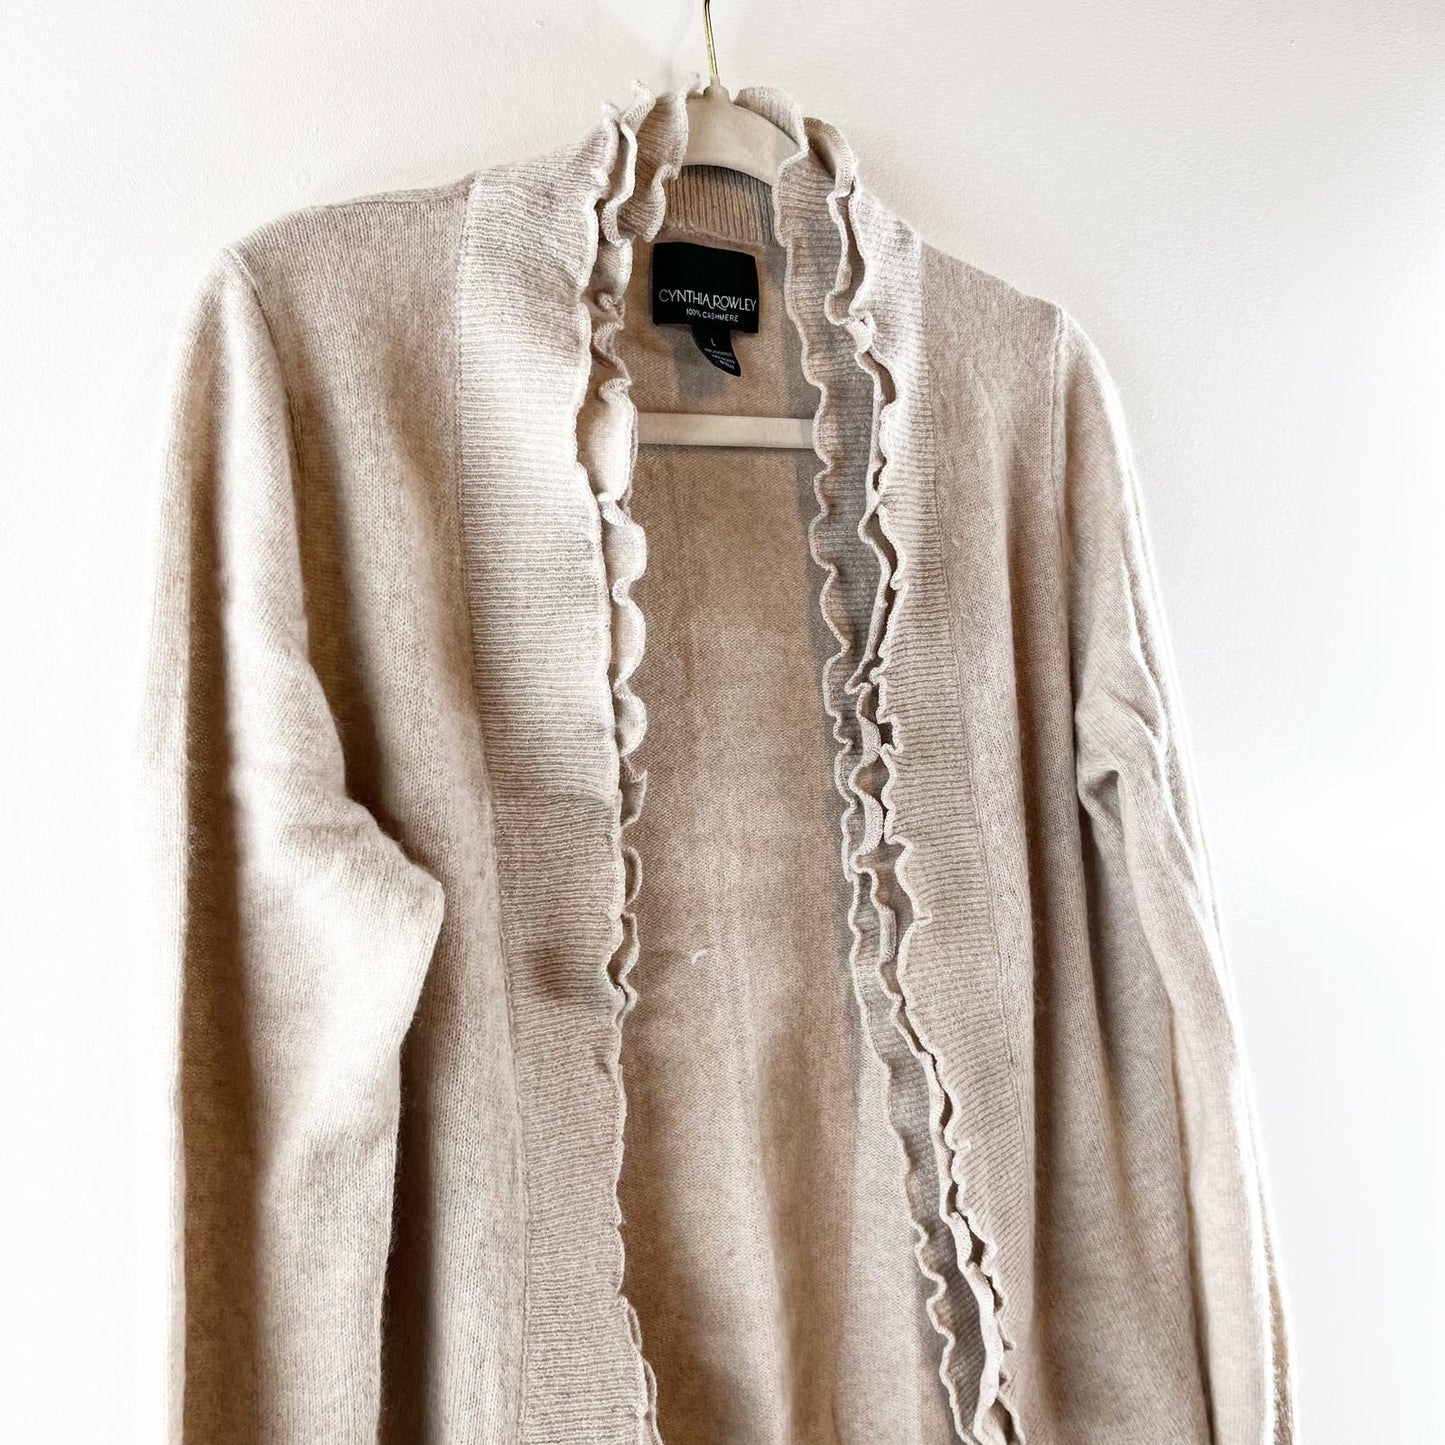 Cynthia Rowley 100% Cashmere Ruffle Trim Cardigan Sweater Beige Large